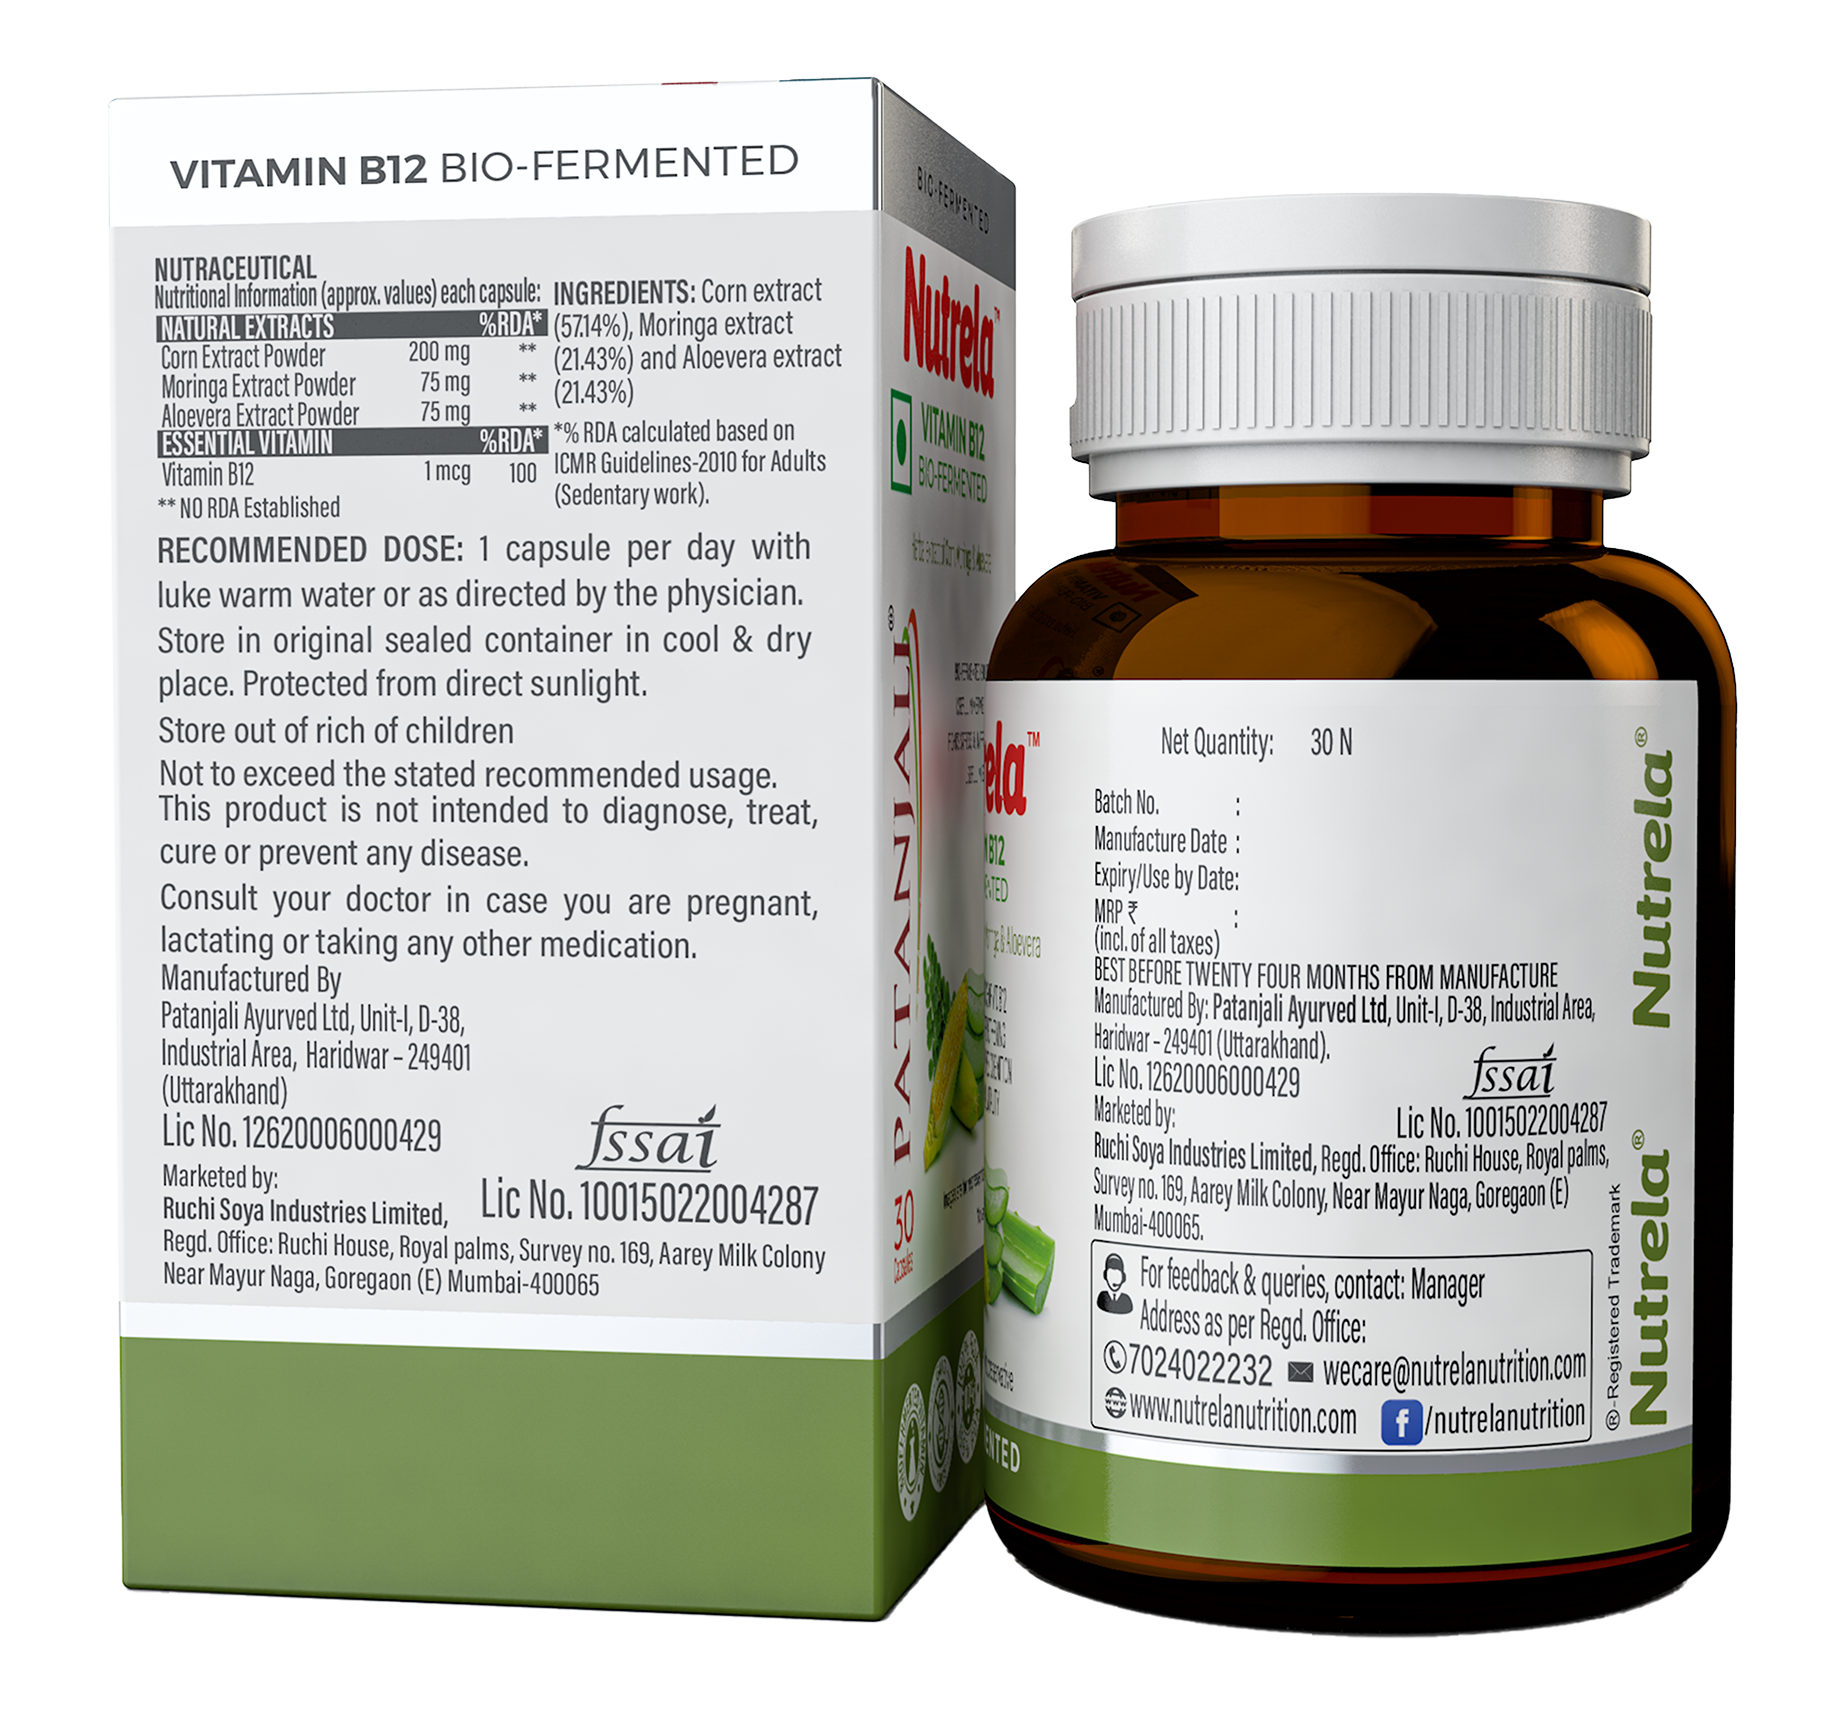 Buy Patanjali Nutrela Vitamin B12 at Best Price Online